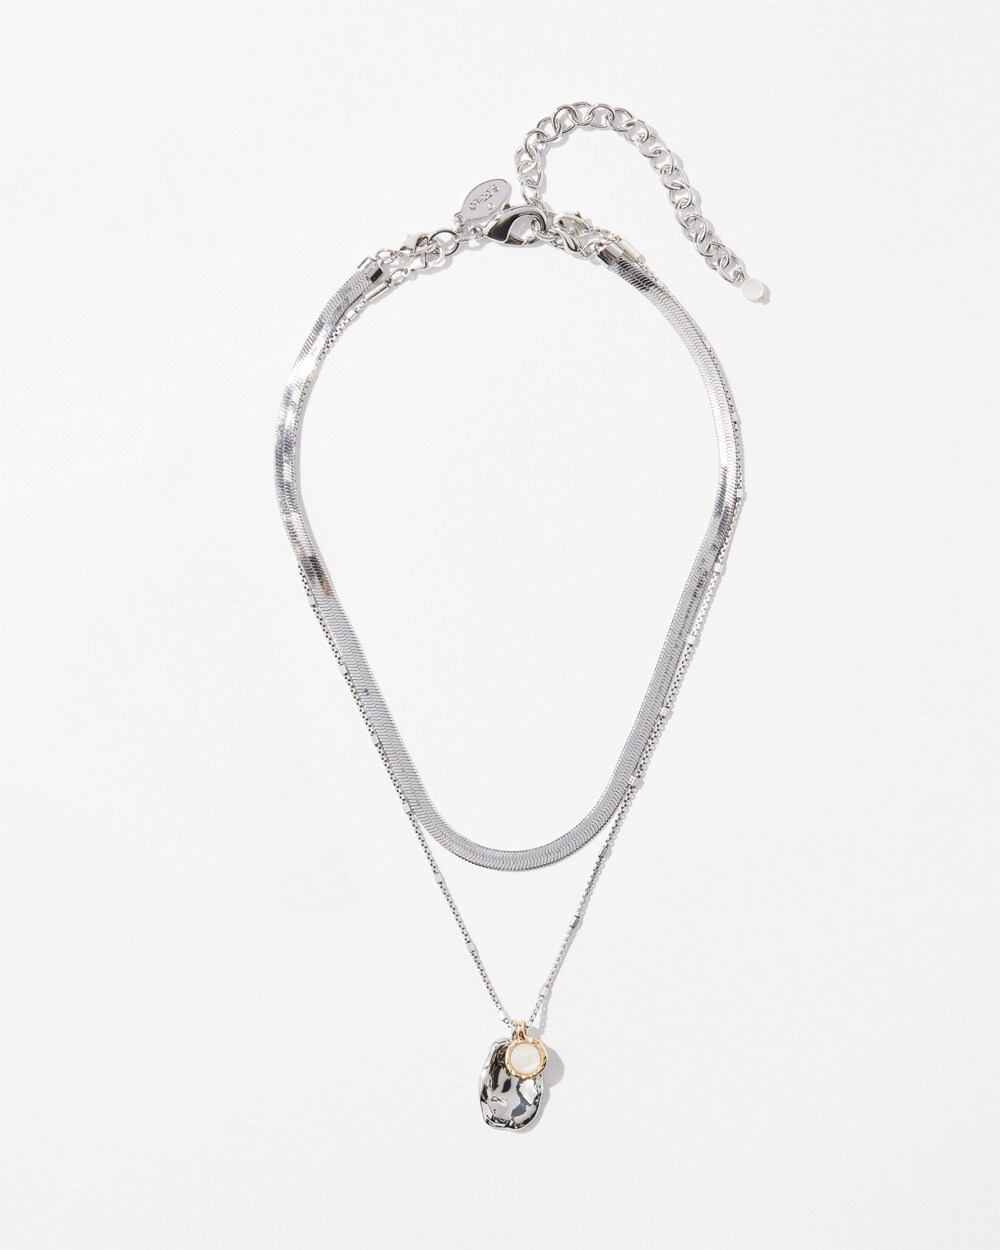 Silver Tone Convertible Necklace